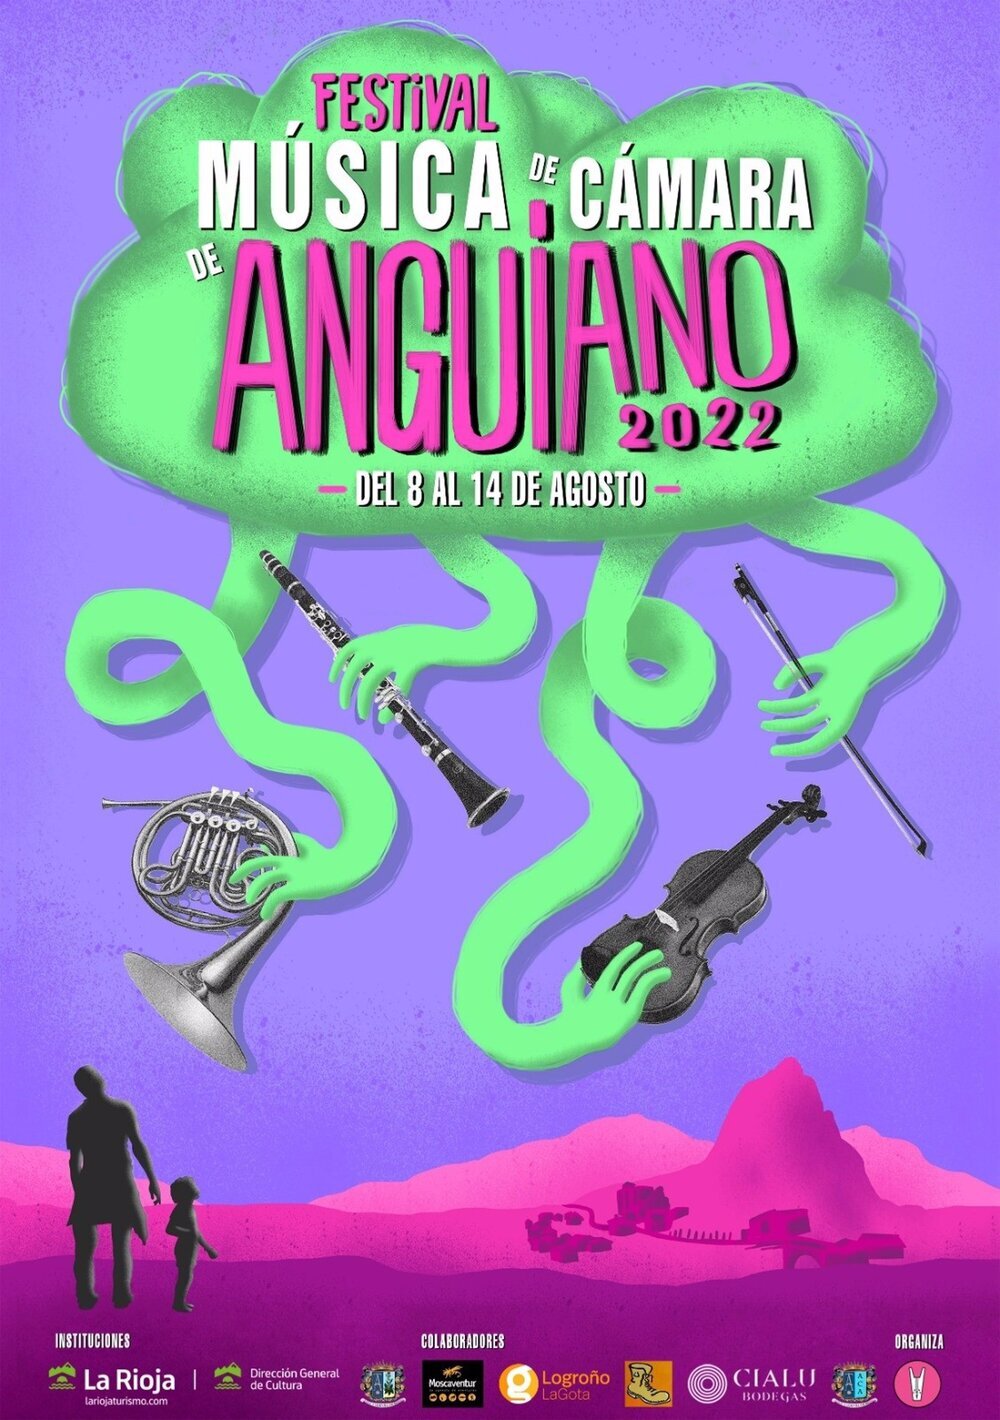 Cartel de Festival de Música de Cámara de Anguiano 2022.